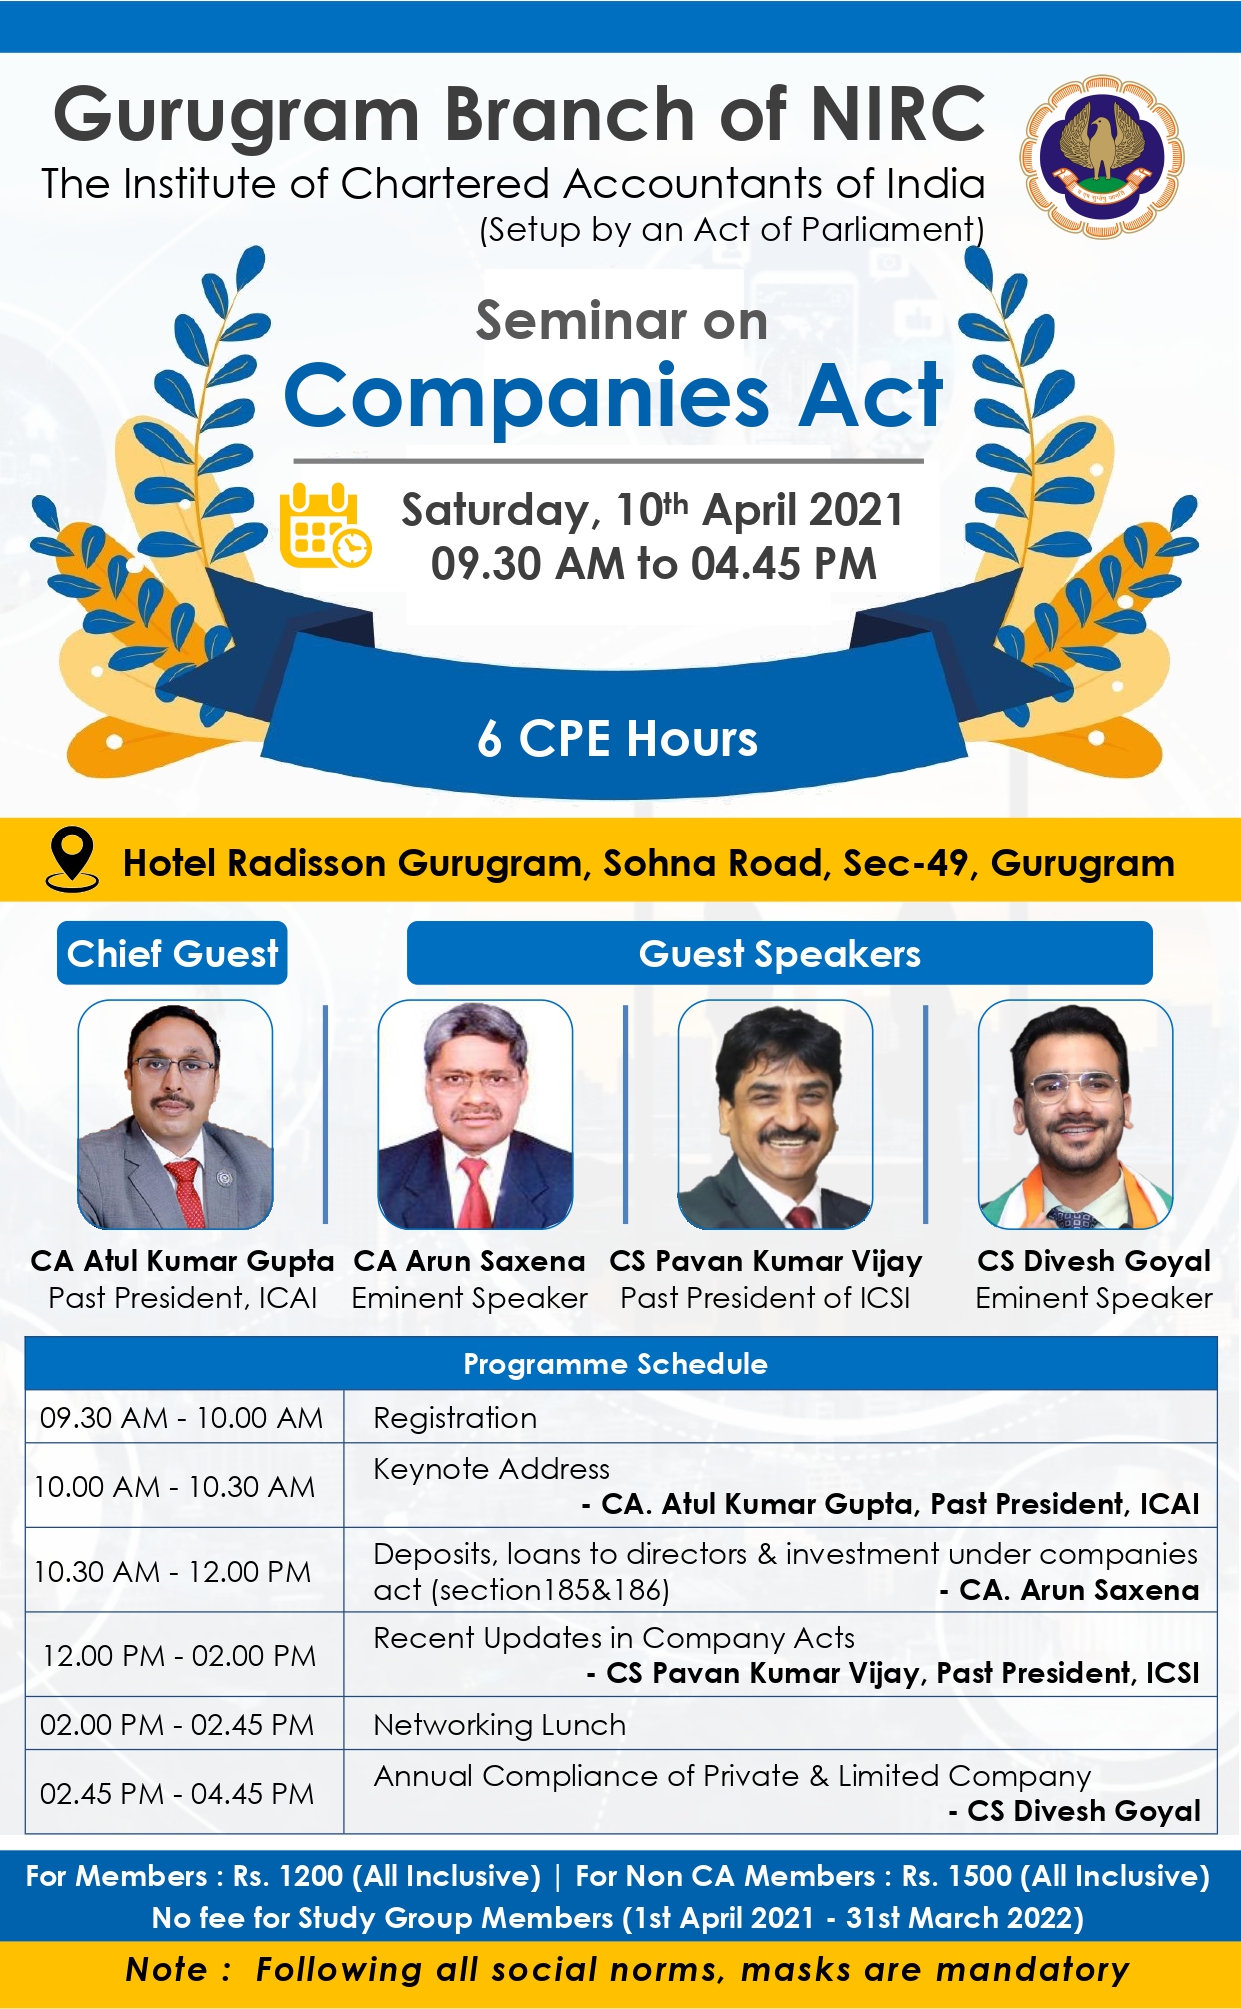 Seminar on Companies Act